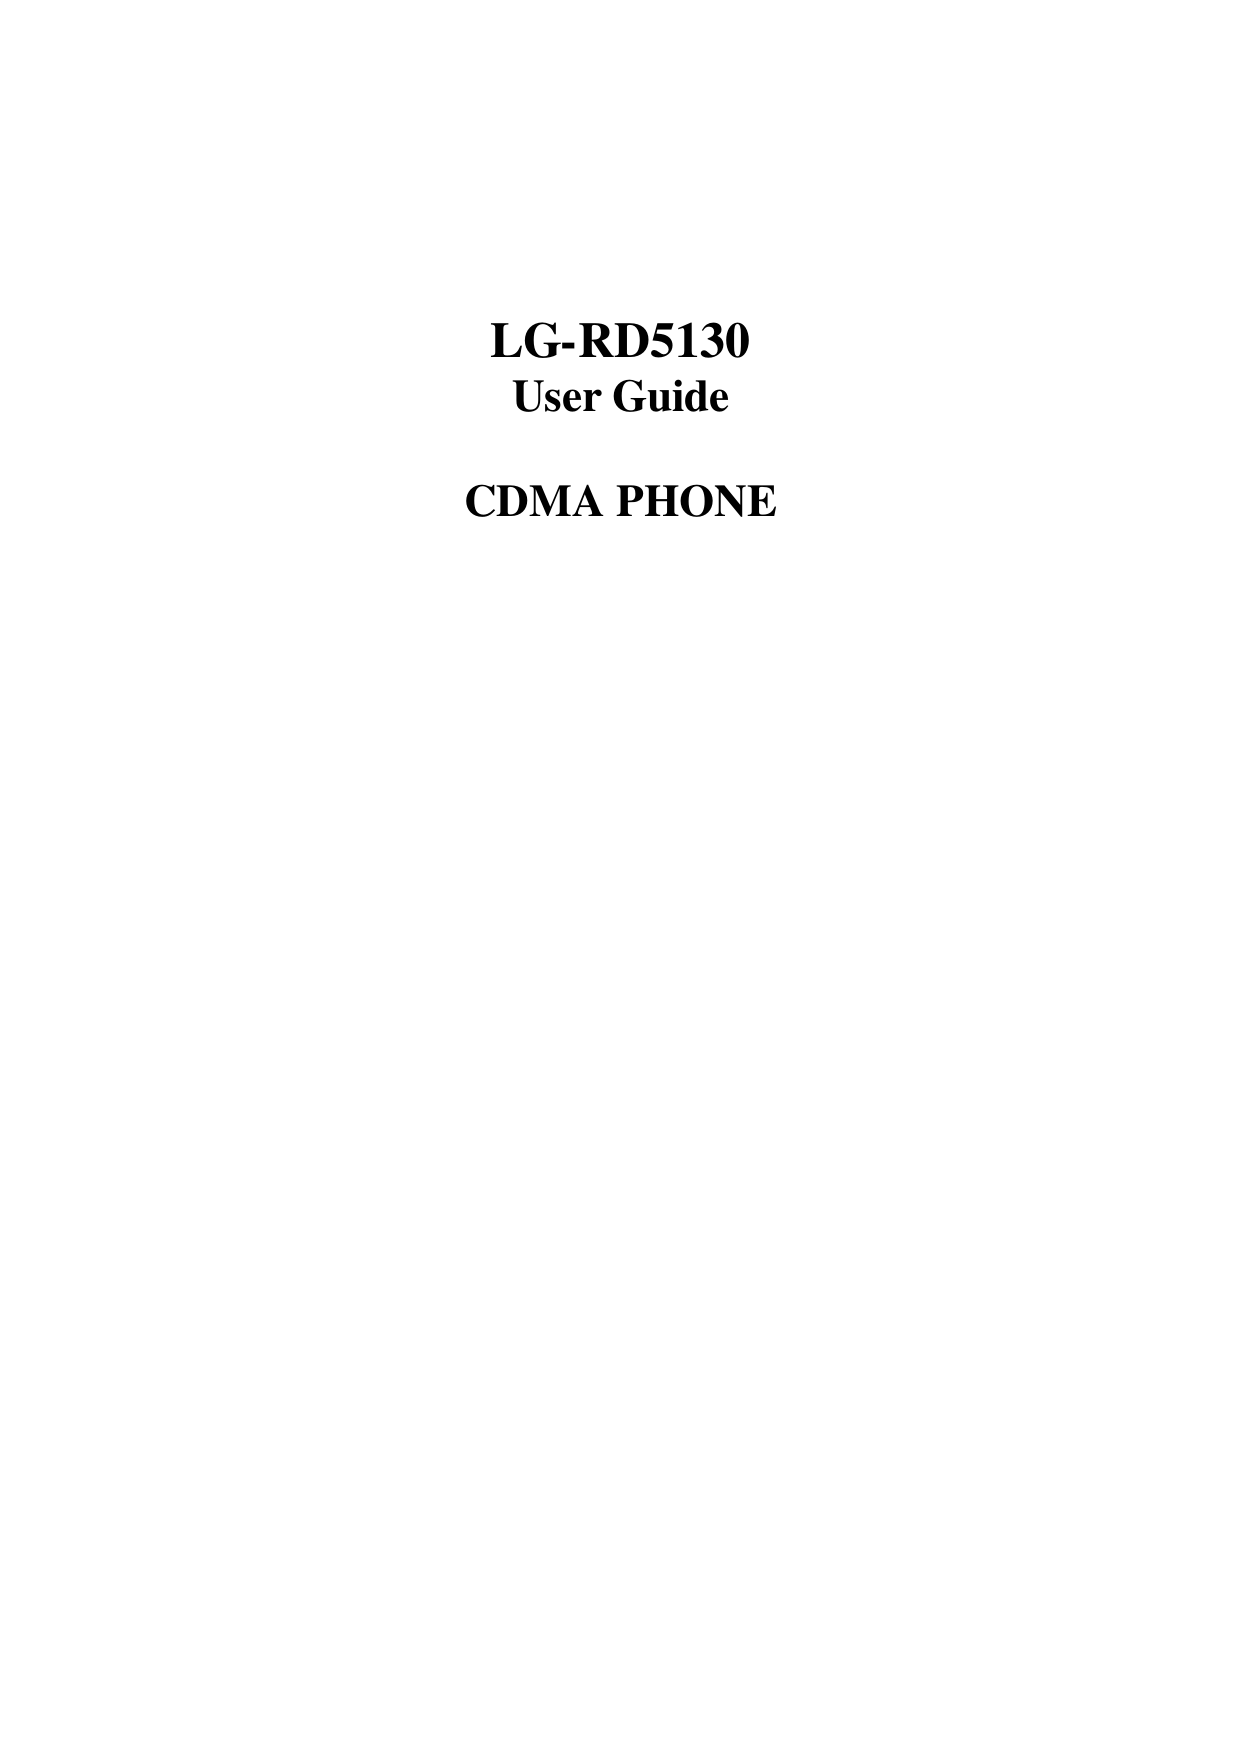   LG-RD5130 User Guide  CDMA PHONE                            